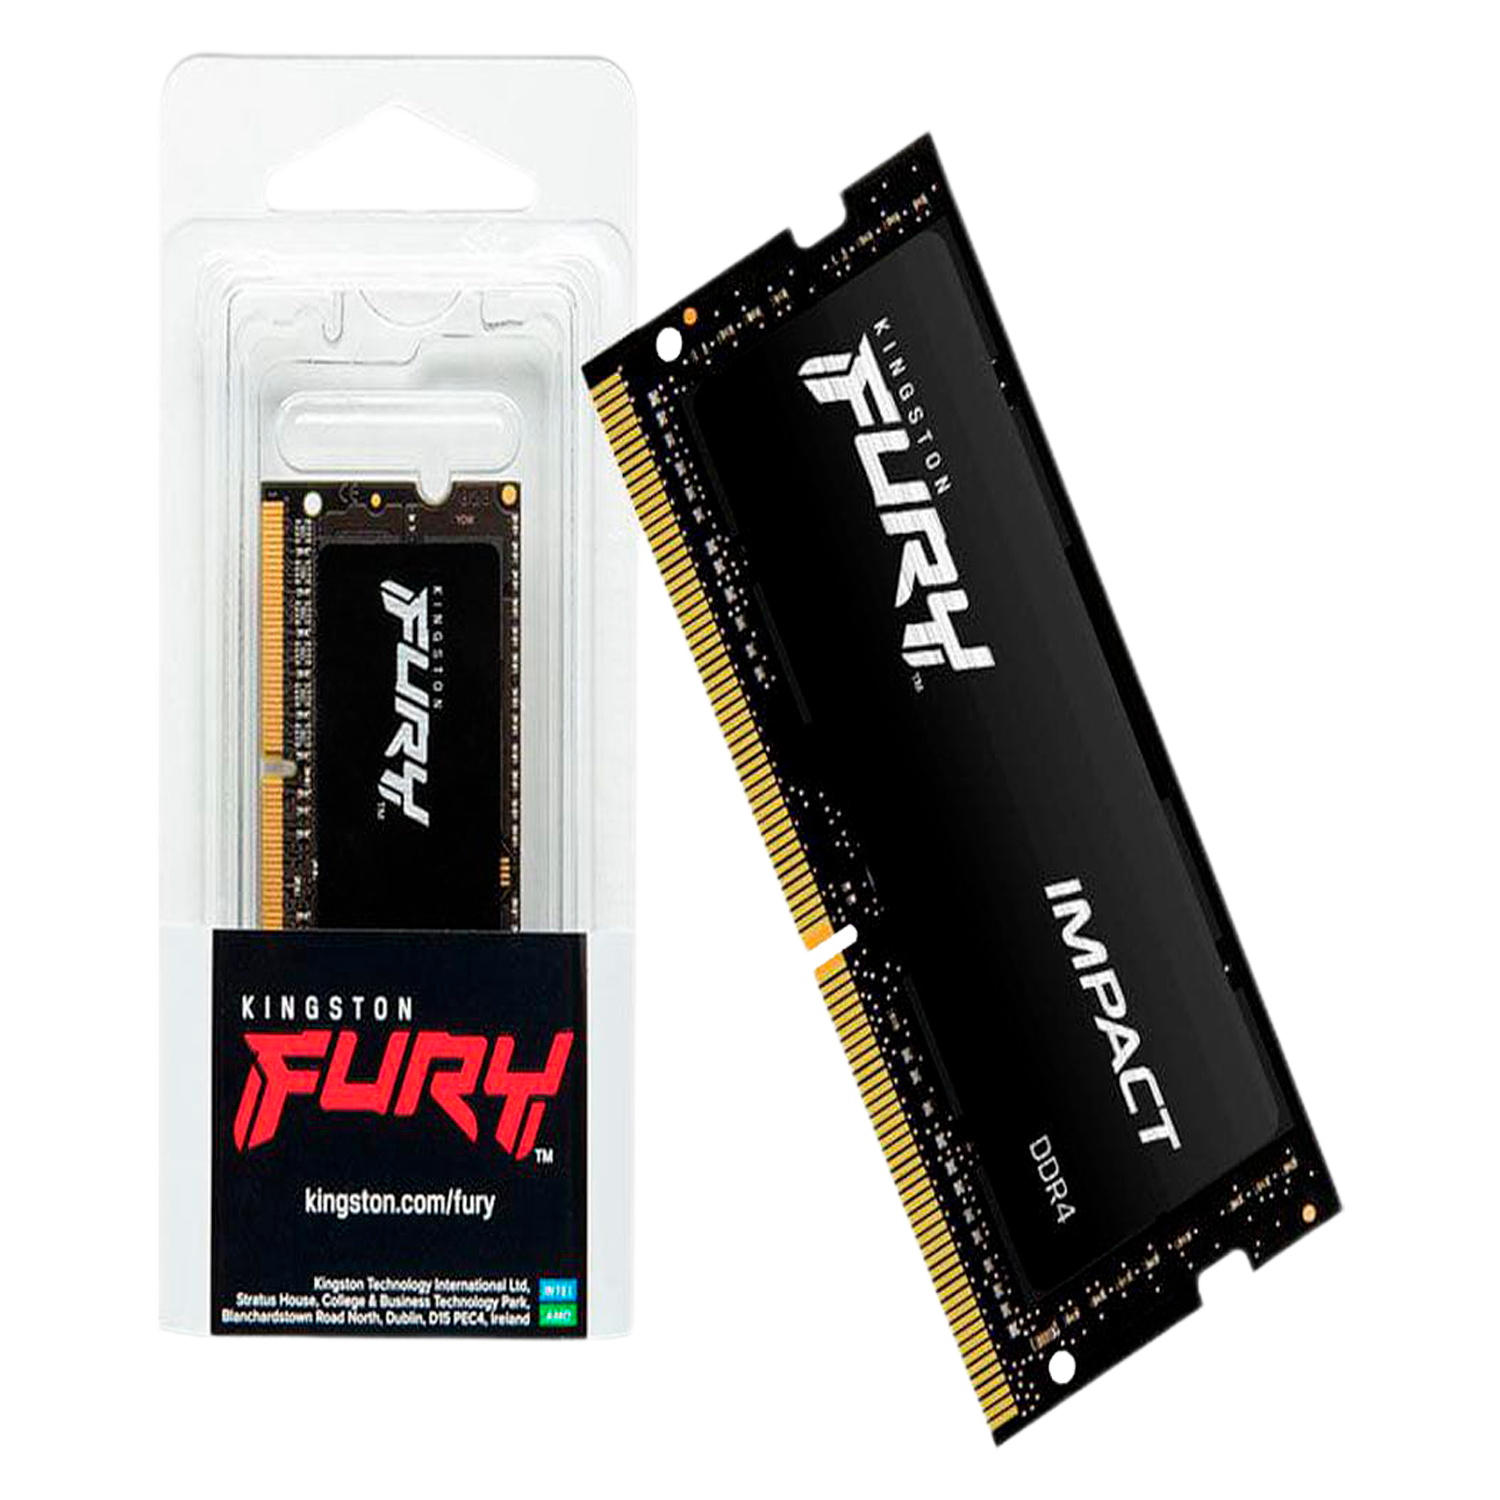 Memória para Notebook Kingston Fury Impact 16GB / DDR4 / 2666MHz - (KF426S15IB1/16)